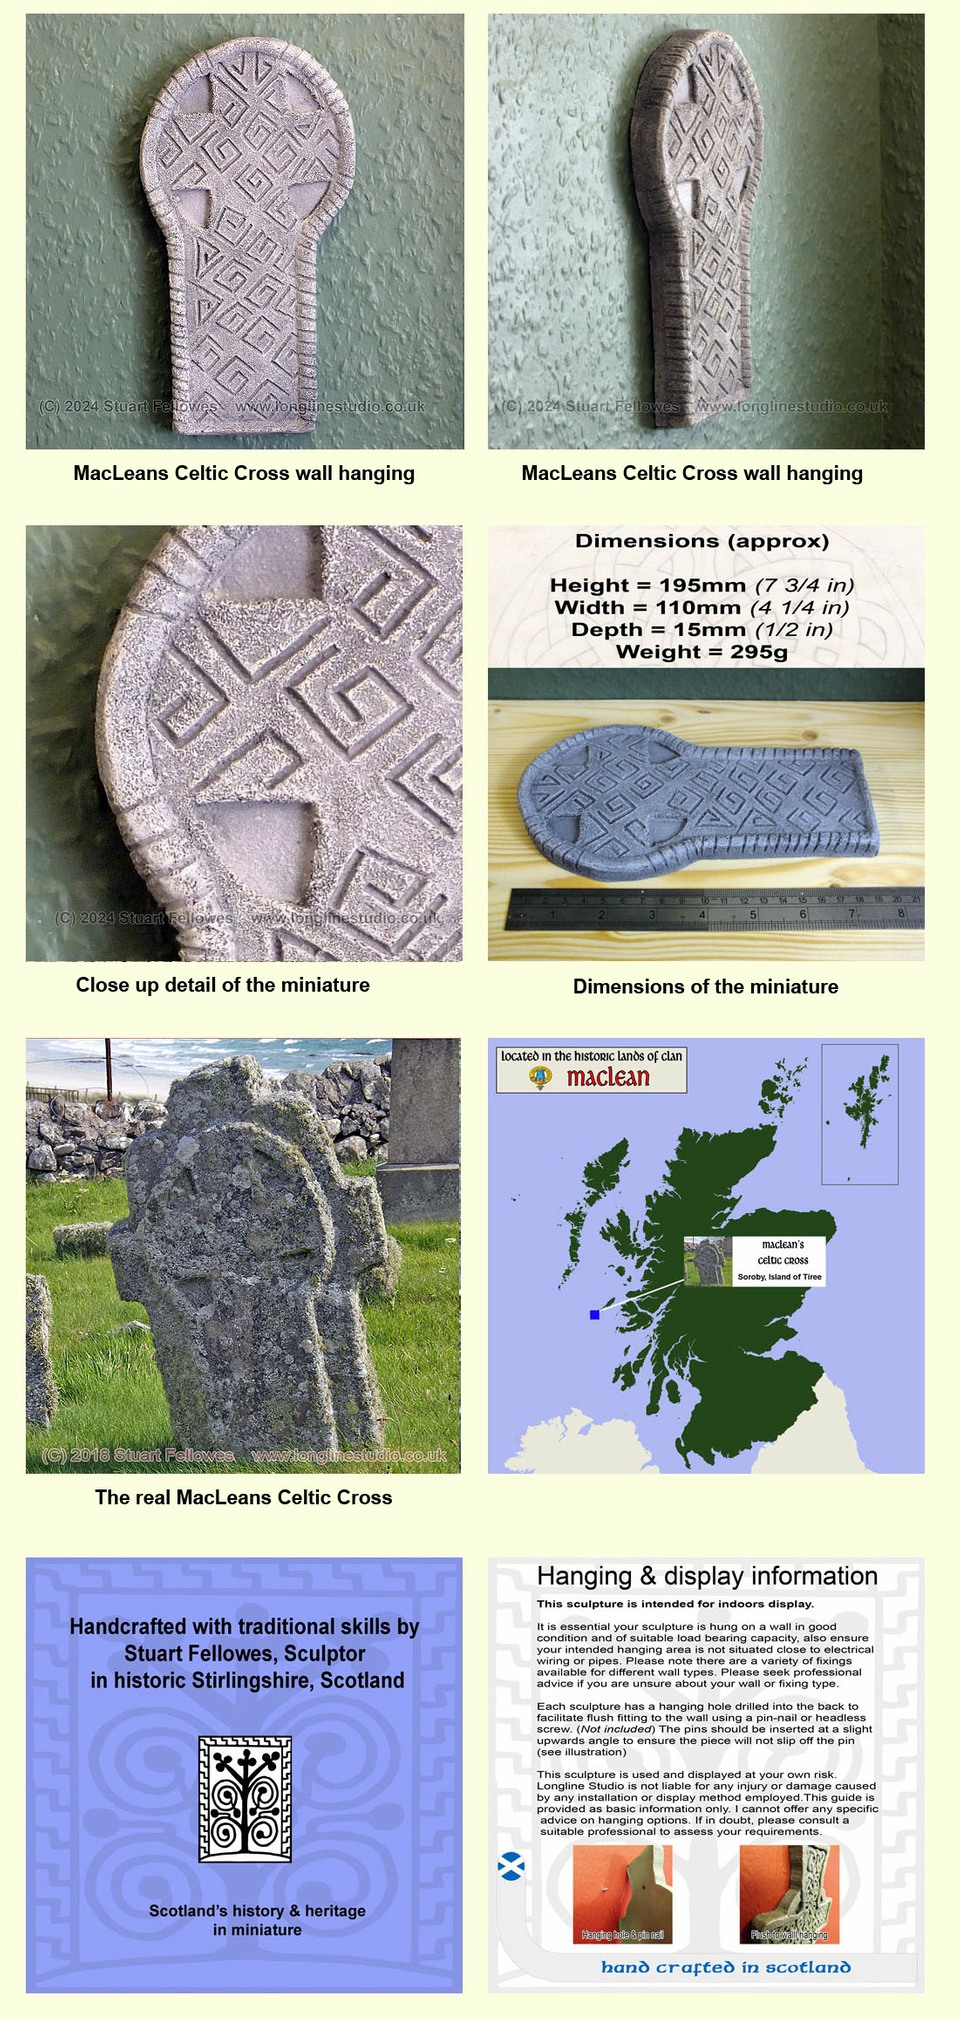 maclean celtic cross, soroby, tiree, stuart fellowes, longline studio